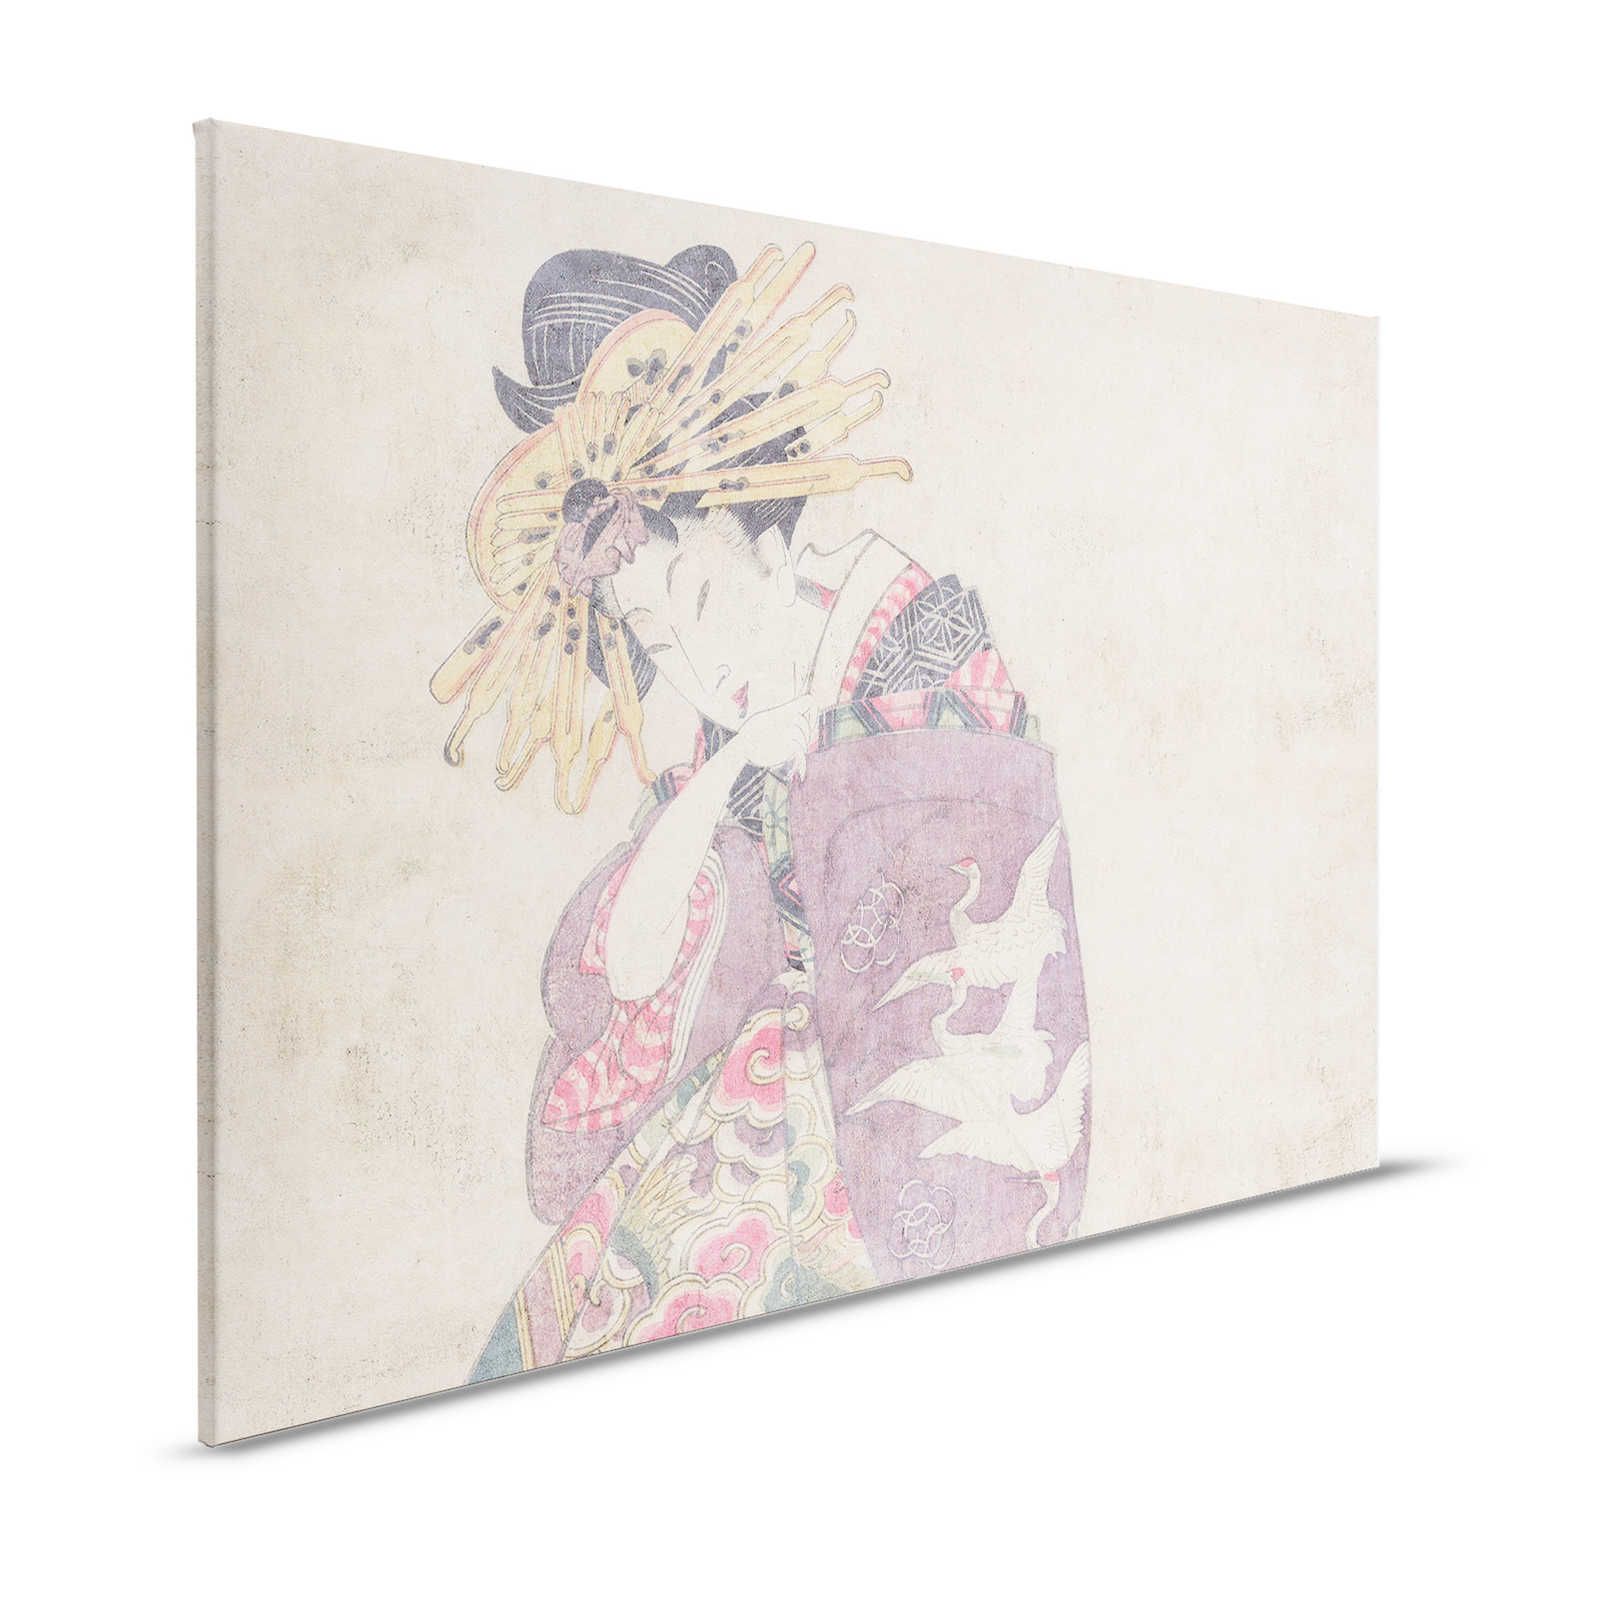 Osaka 1 - Kunstdruck Leinwandbild Asian Dekor im Vintage Stil – 1,20 m x 0,80 m
